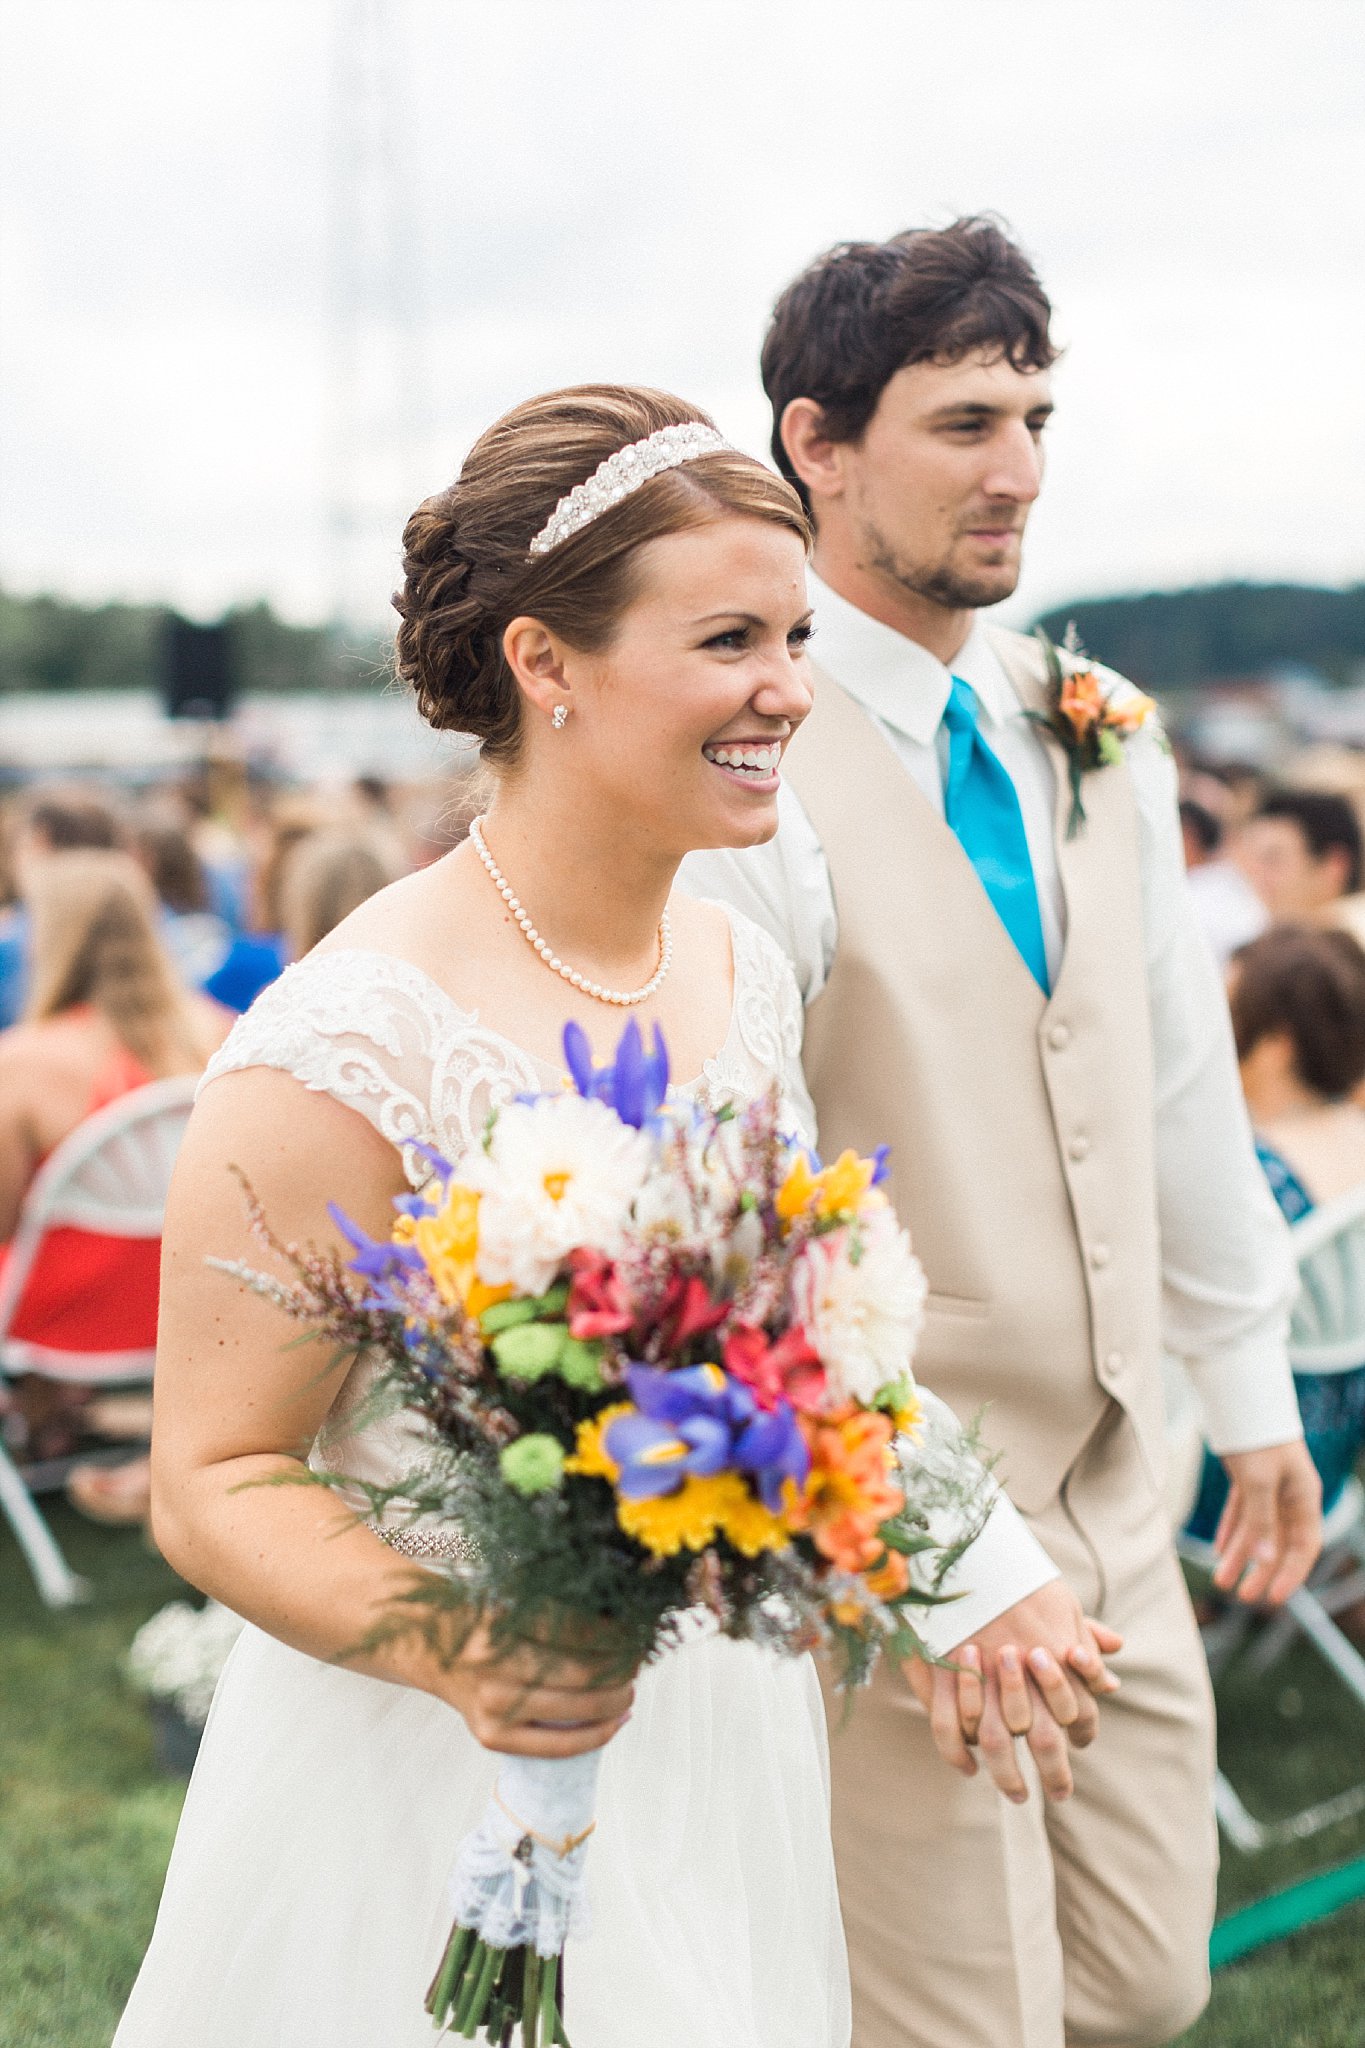 www.james-stokes.com | James Stokes Photography, LLC - Wisconsin wedding photographer - photo of bride and groom